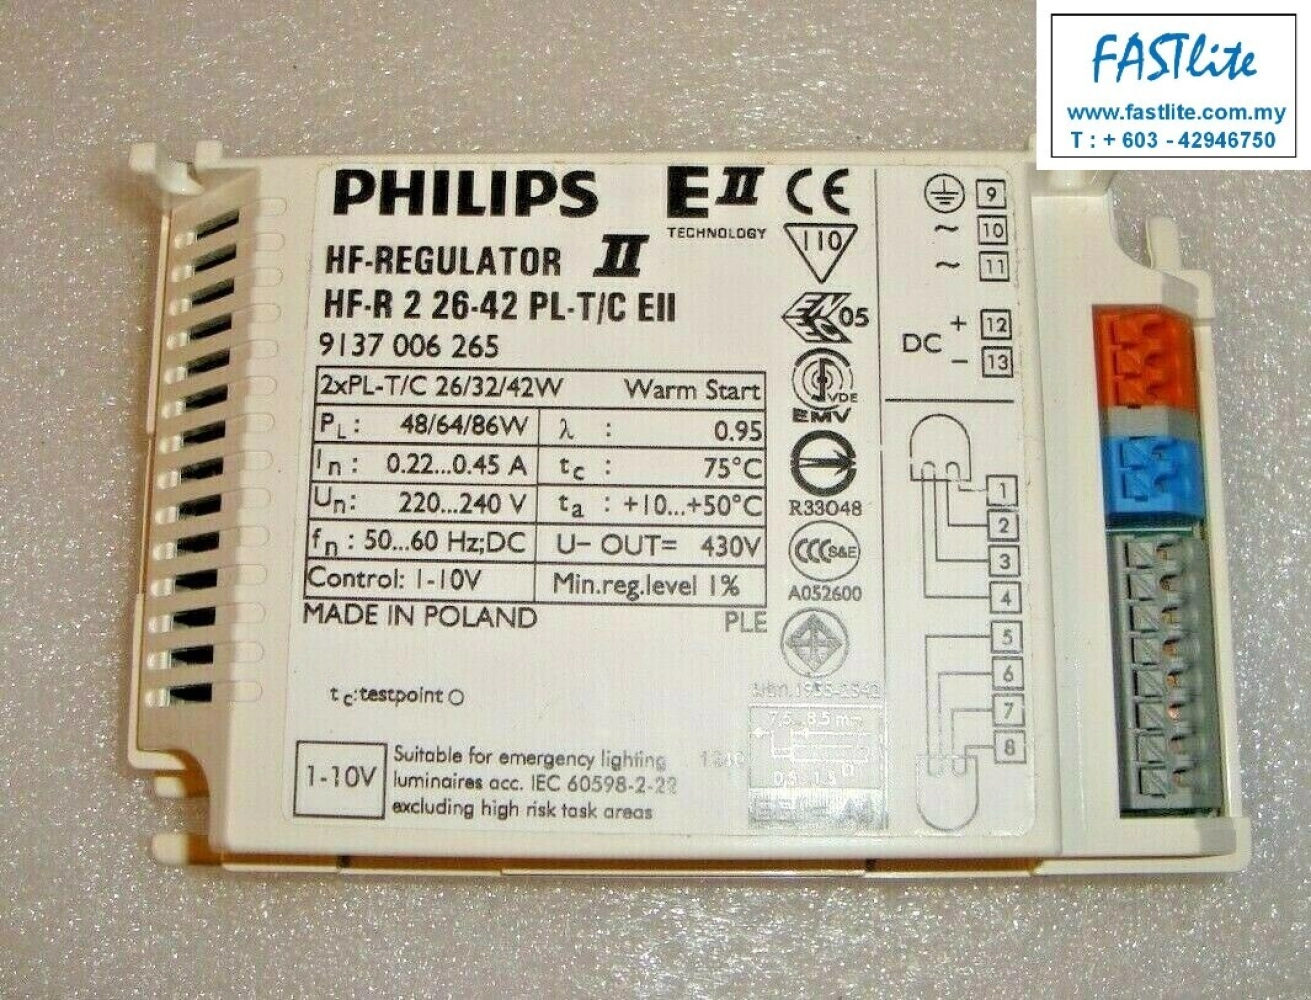 Philips HF-R 2 x 26-42 PL-T/C EII 220-240V 50/60Hz Electronic Ballast